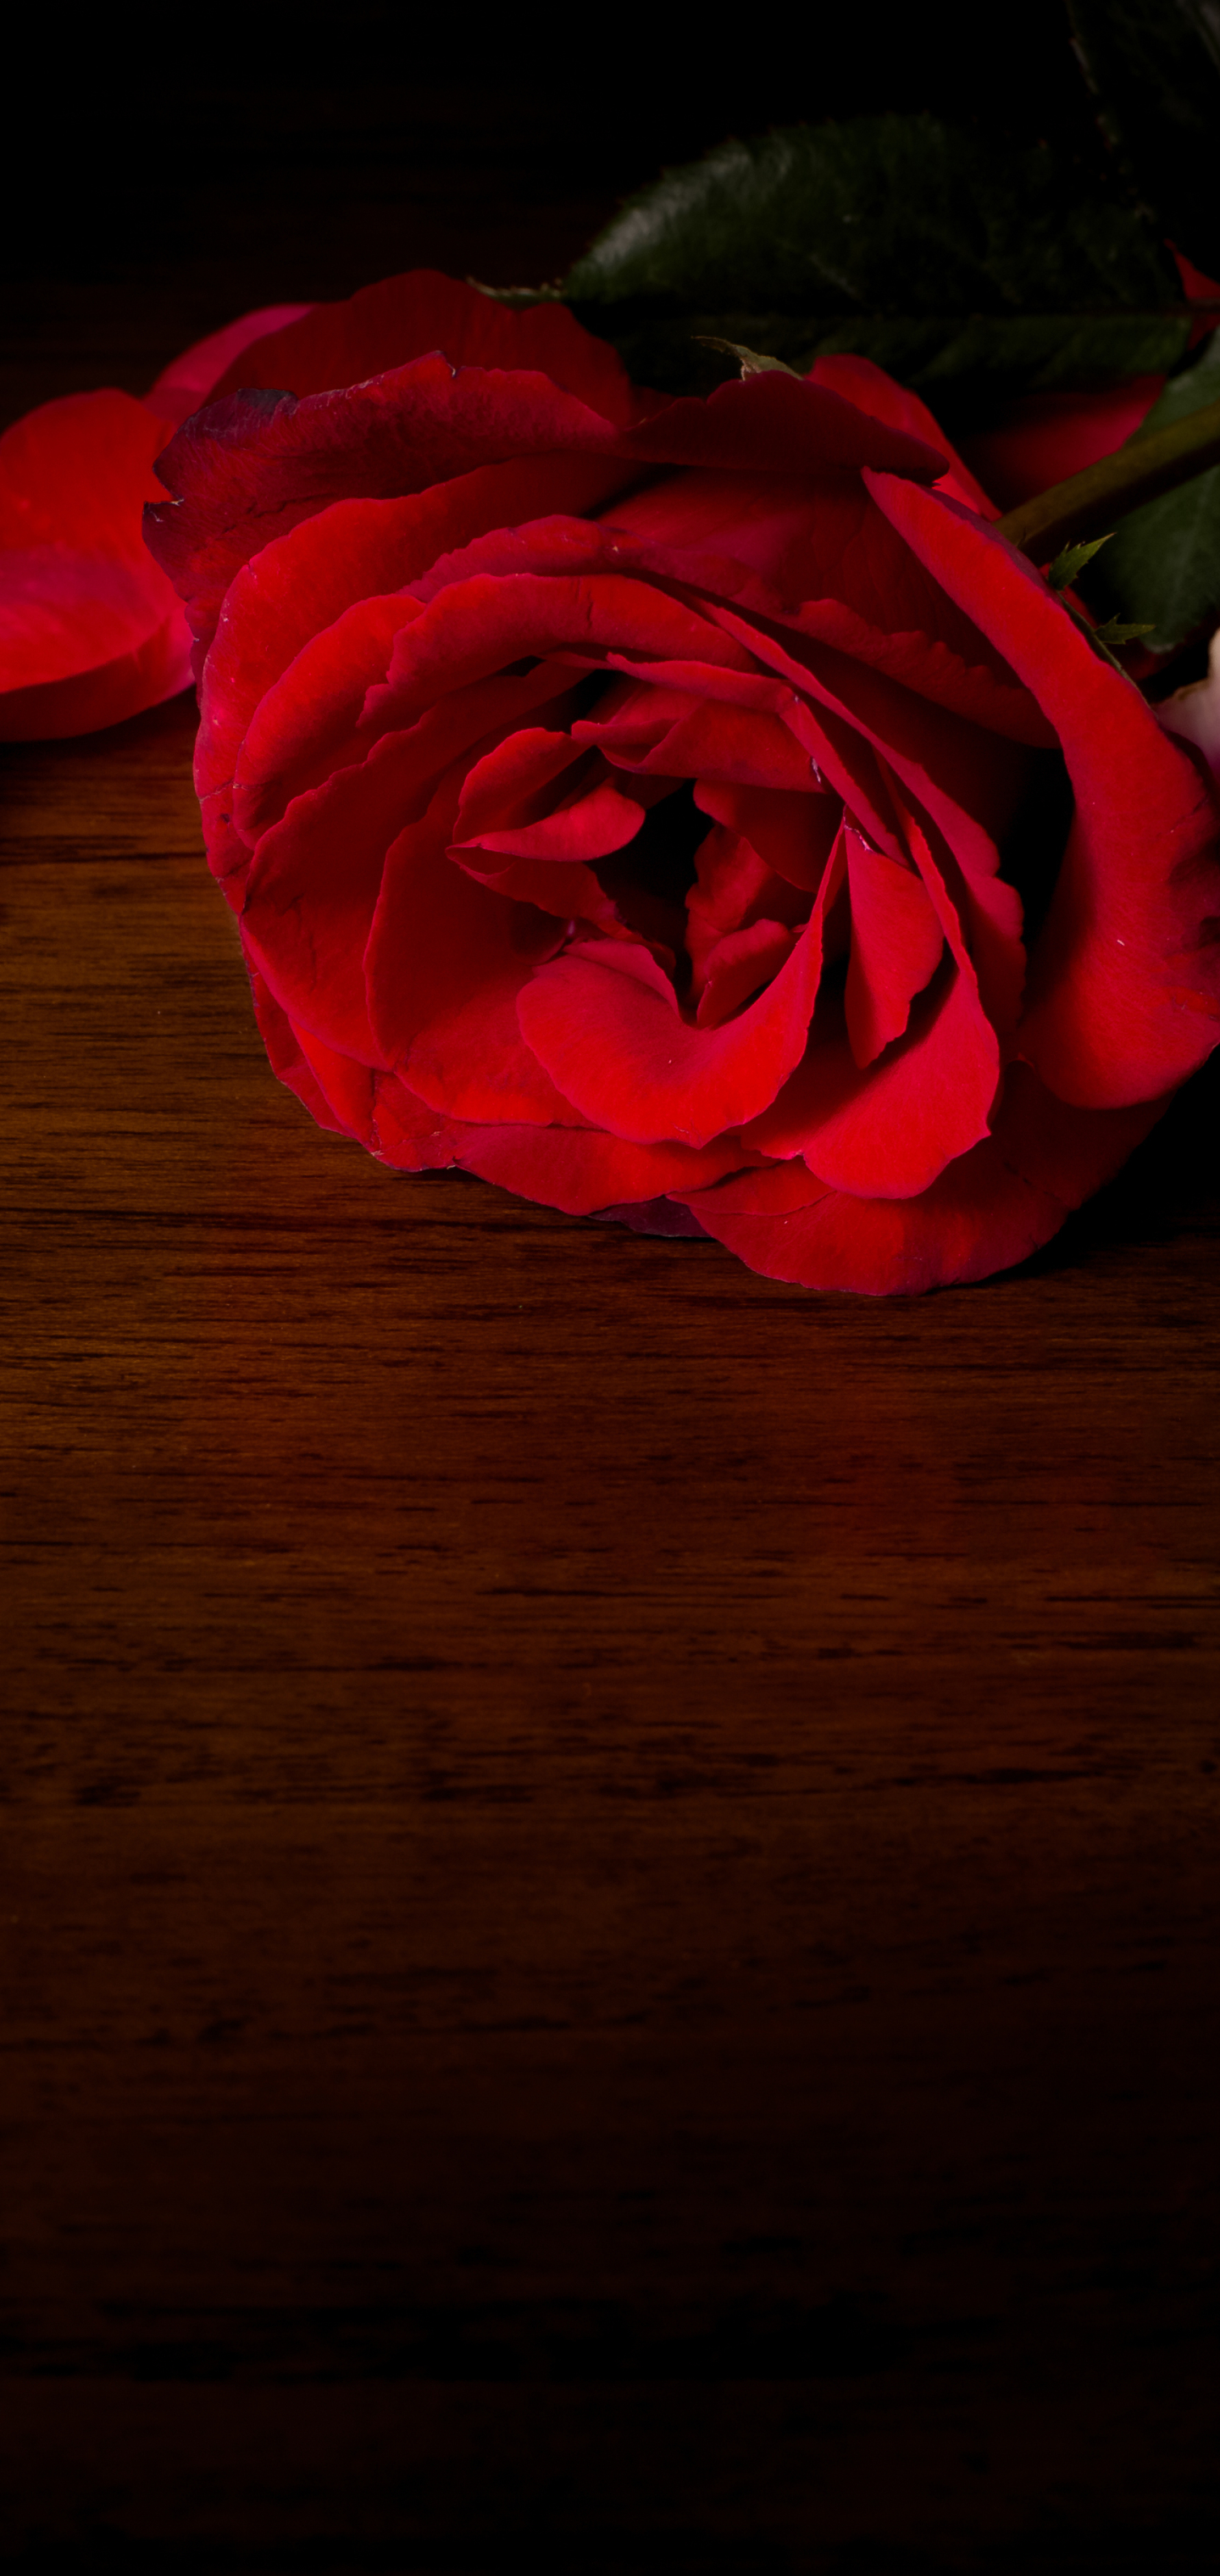 Red Rose and Rose Petals